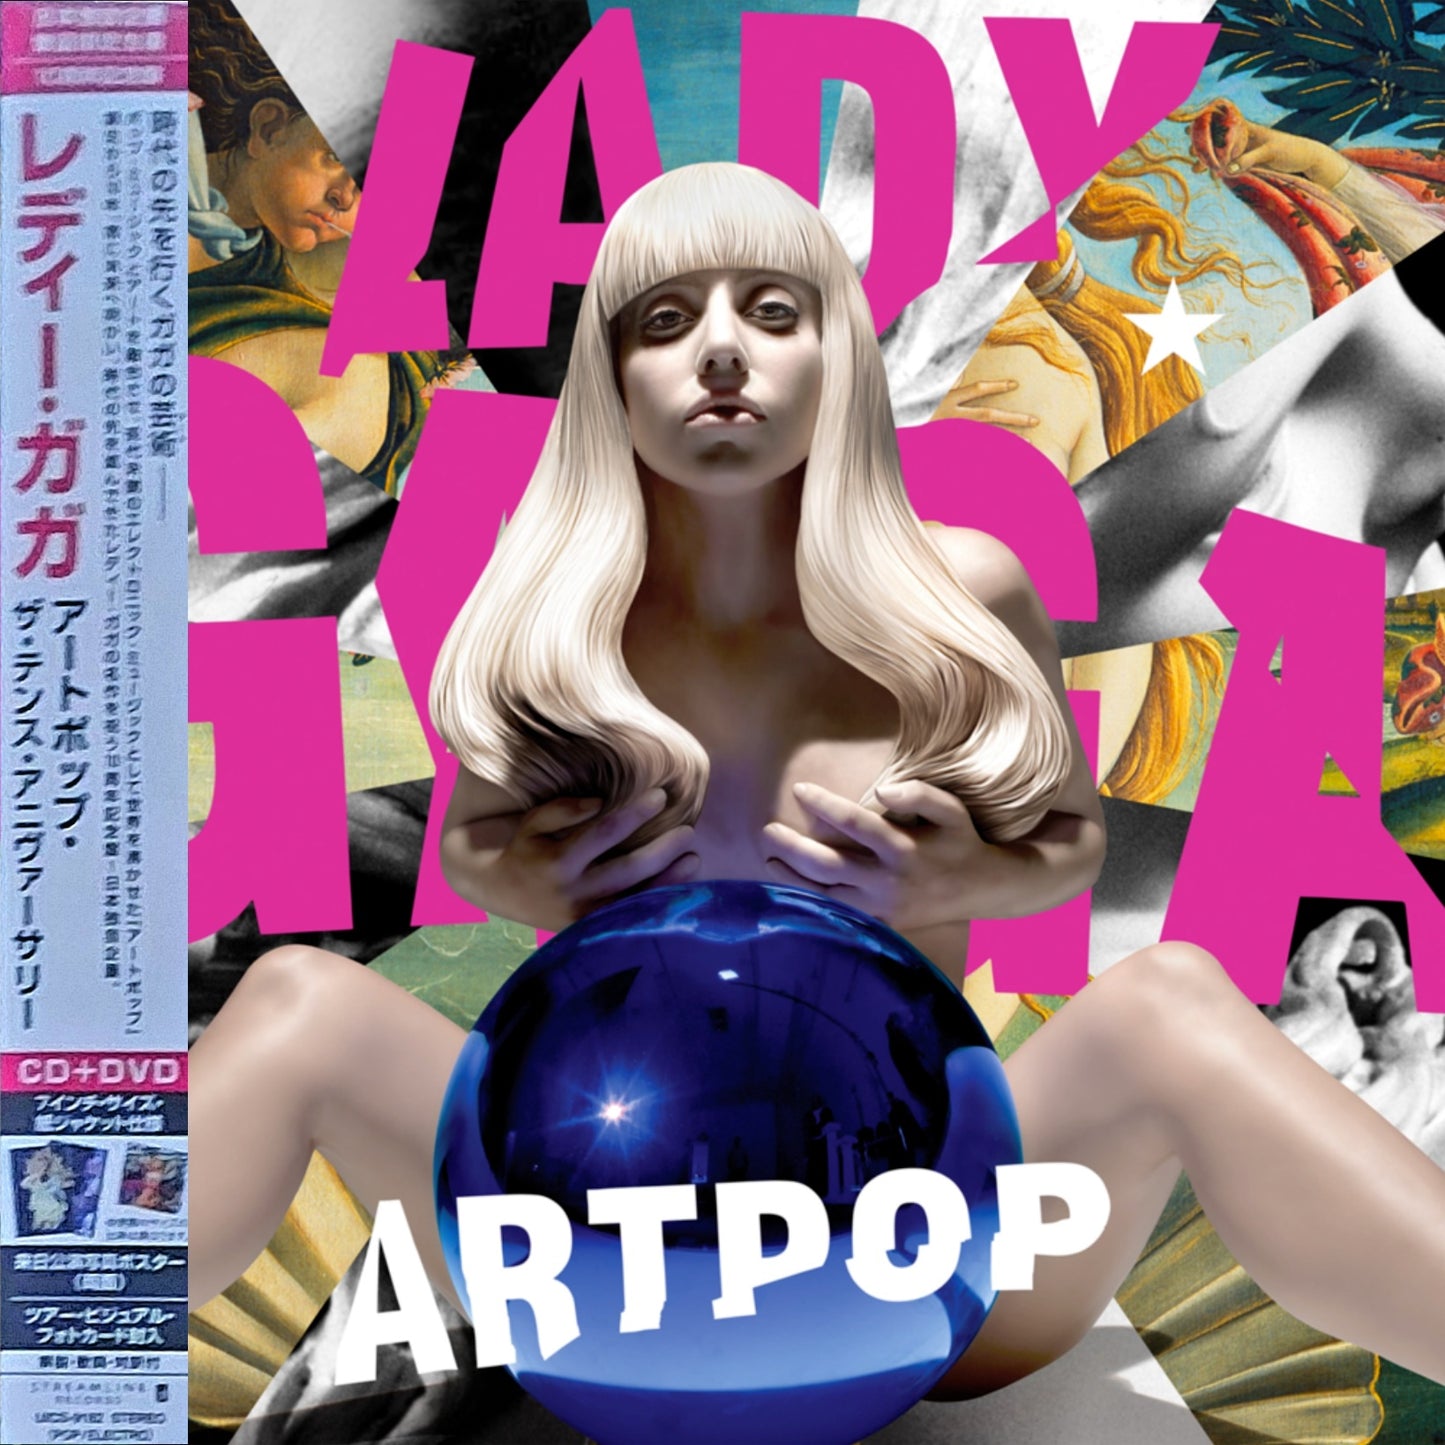 Lady Gaga: Artpop - 10th Anniversary Japan 7" Mini-LP CD & DVD